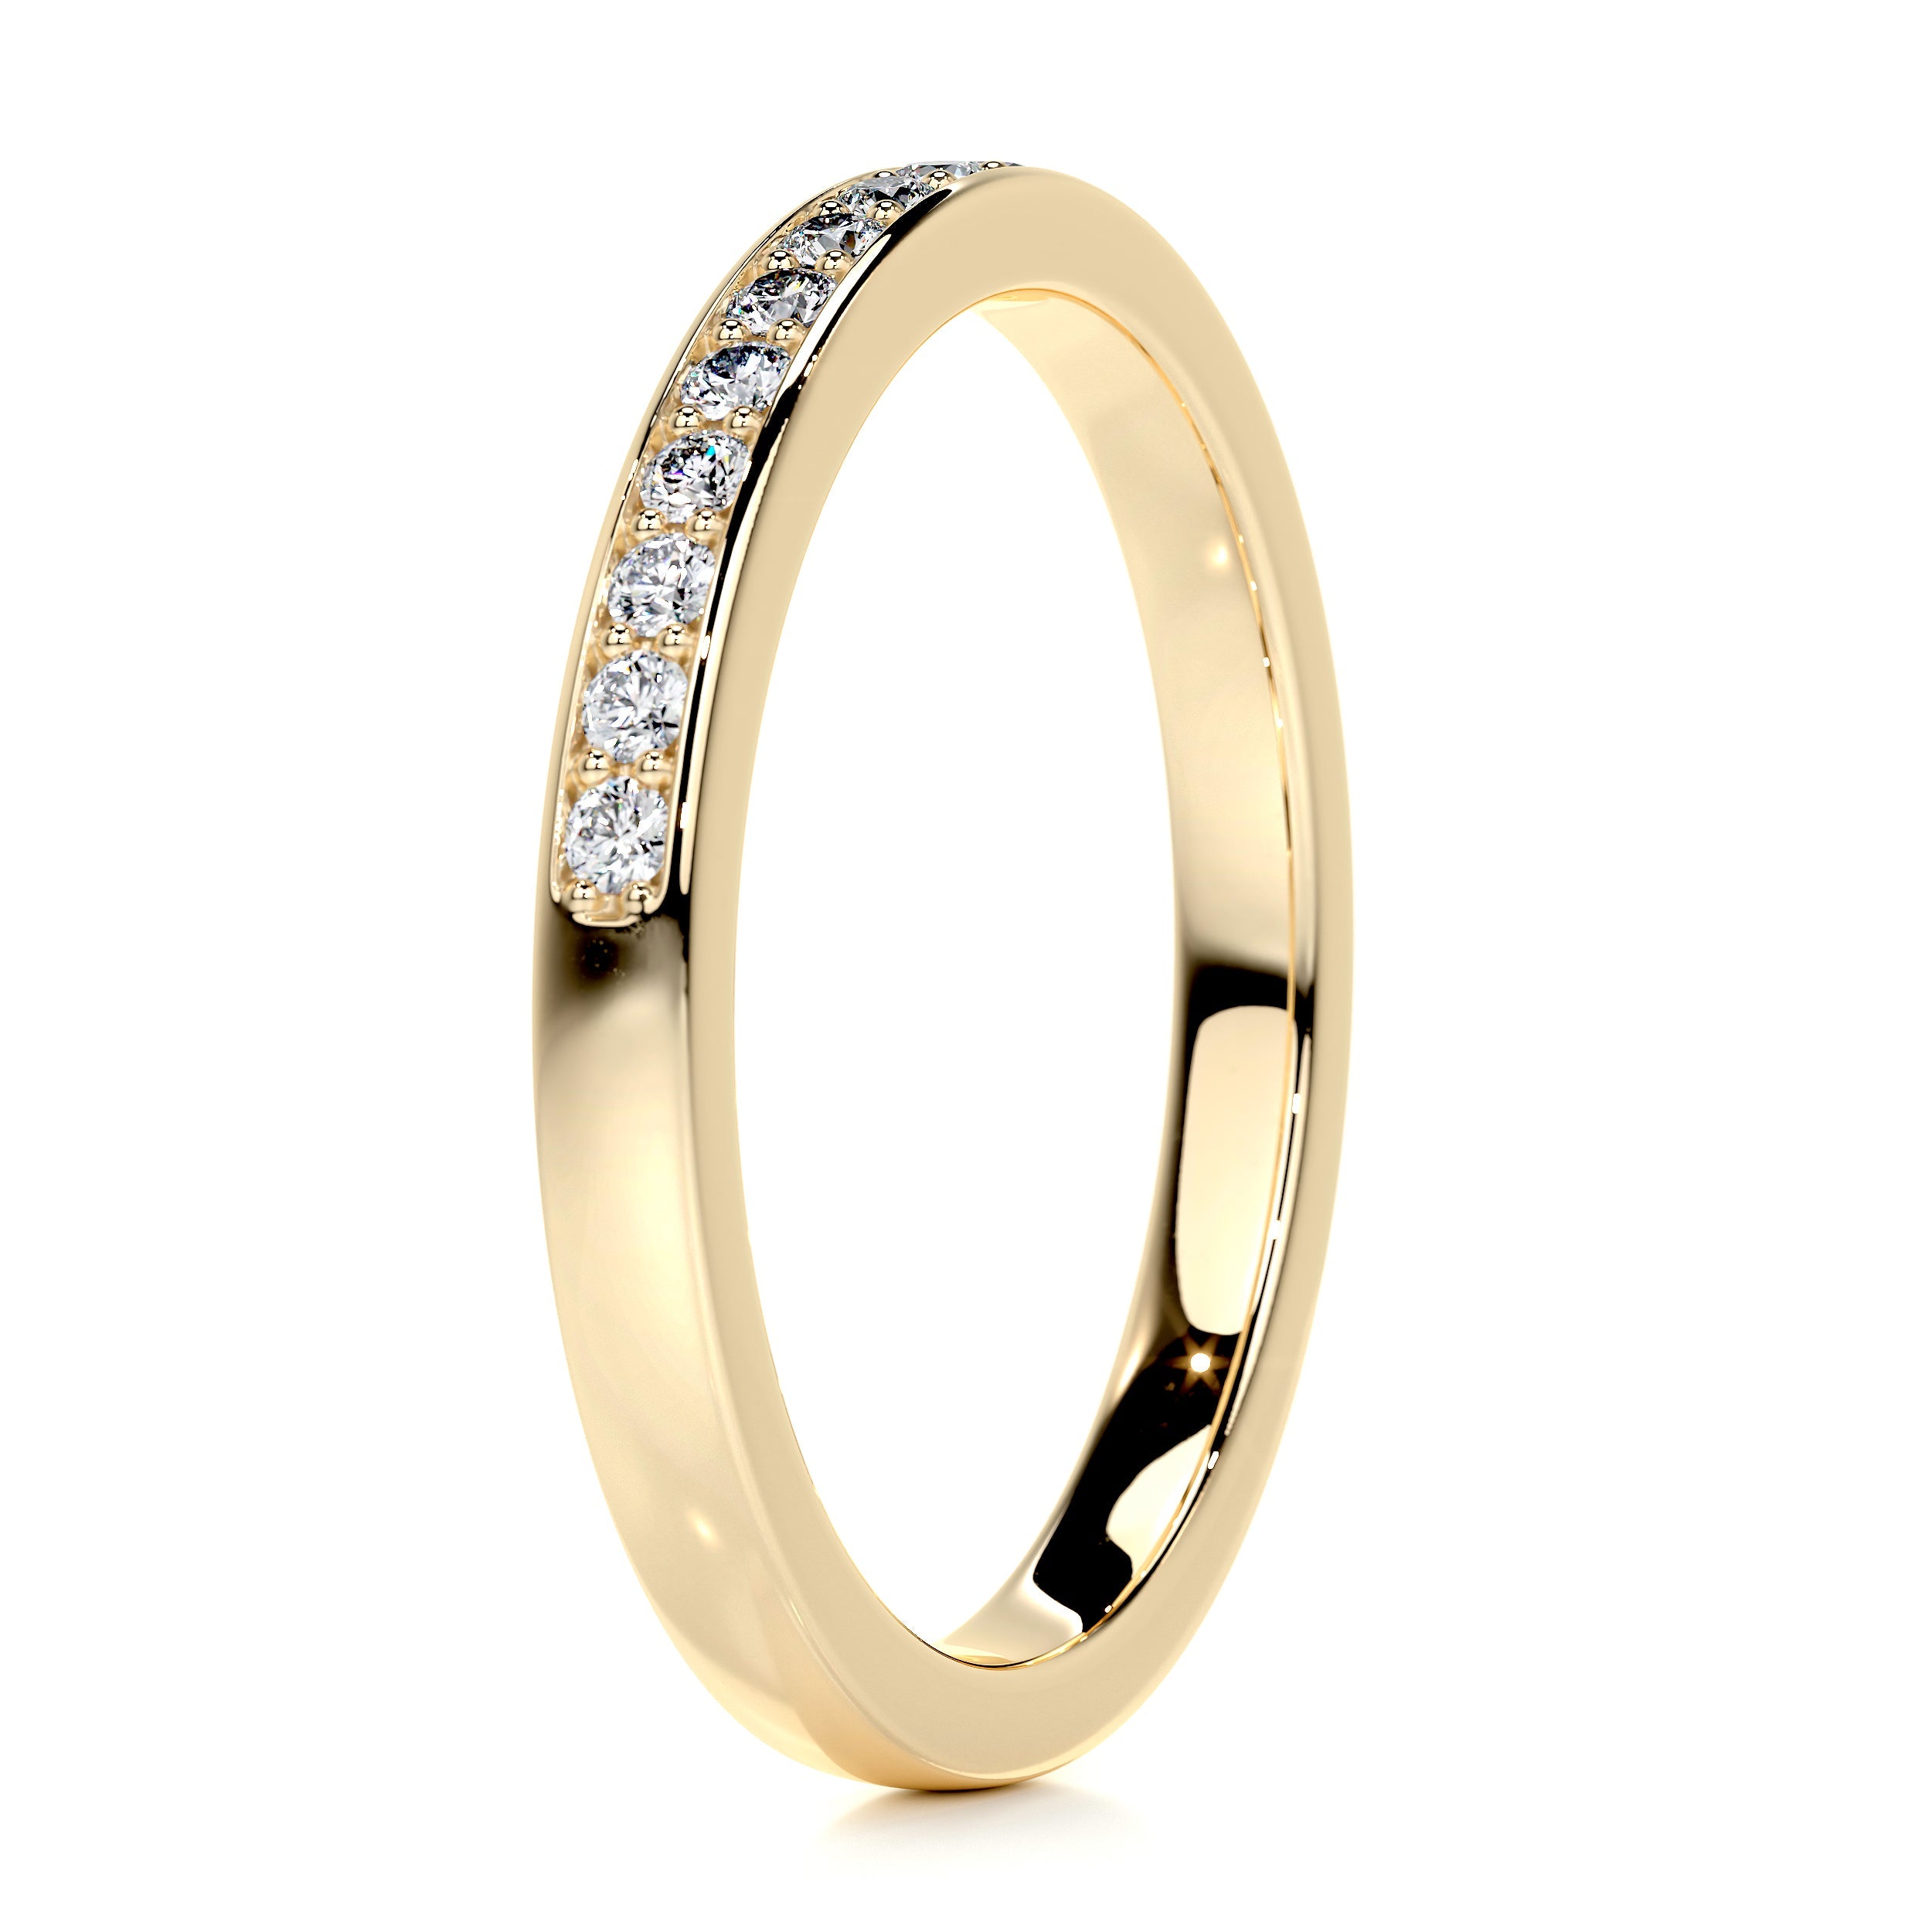 Giselle Diamond Wedding Ring   (0.2 Carat) -14K Yellow Gold (RTS)